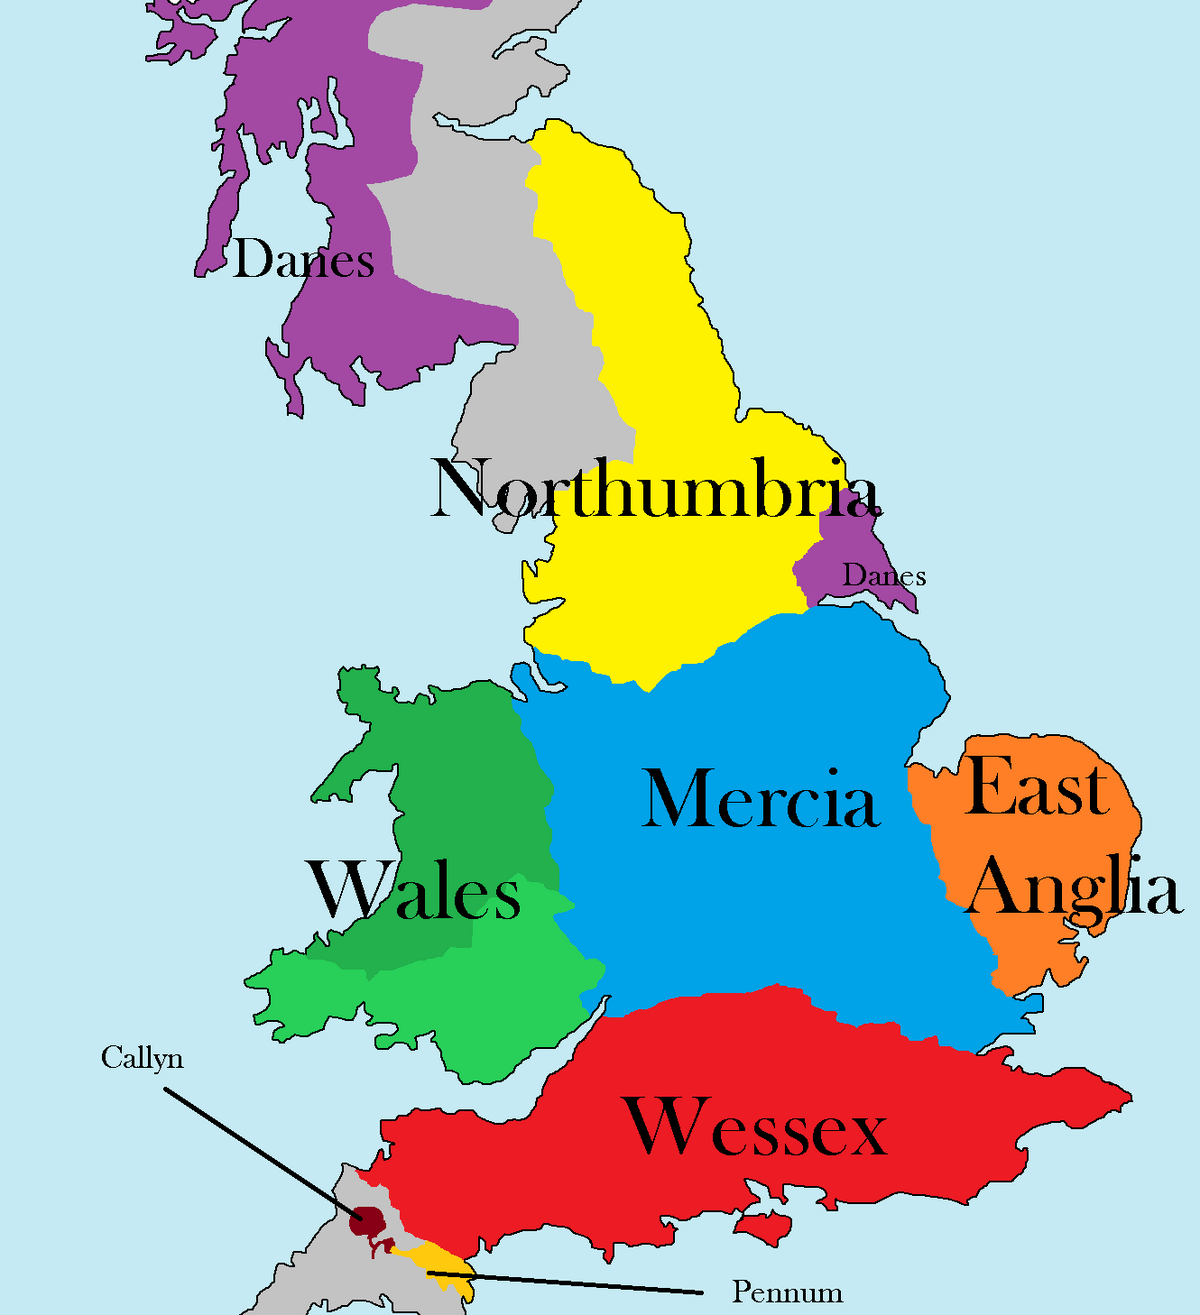 Map of the Kingdom of Northumbria around 700 AD - Kingdom of